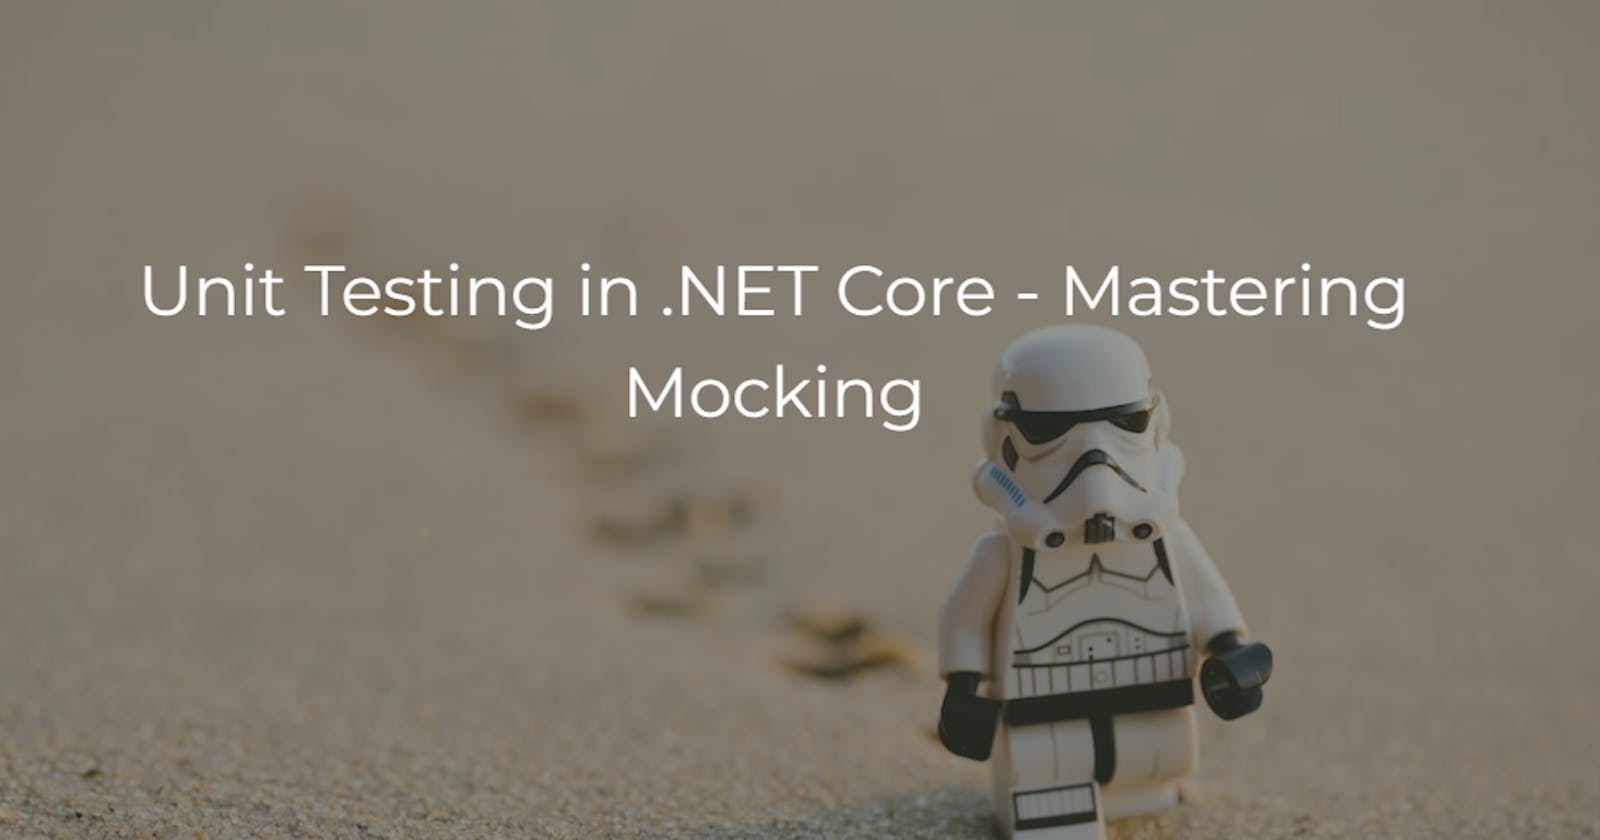 Unit Testing in .NET Core - Mastering Mocking